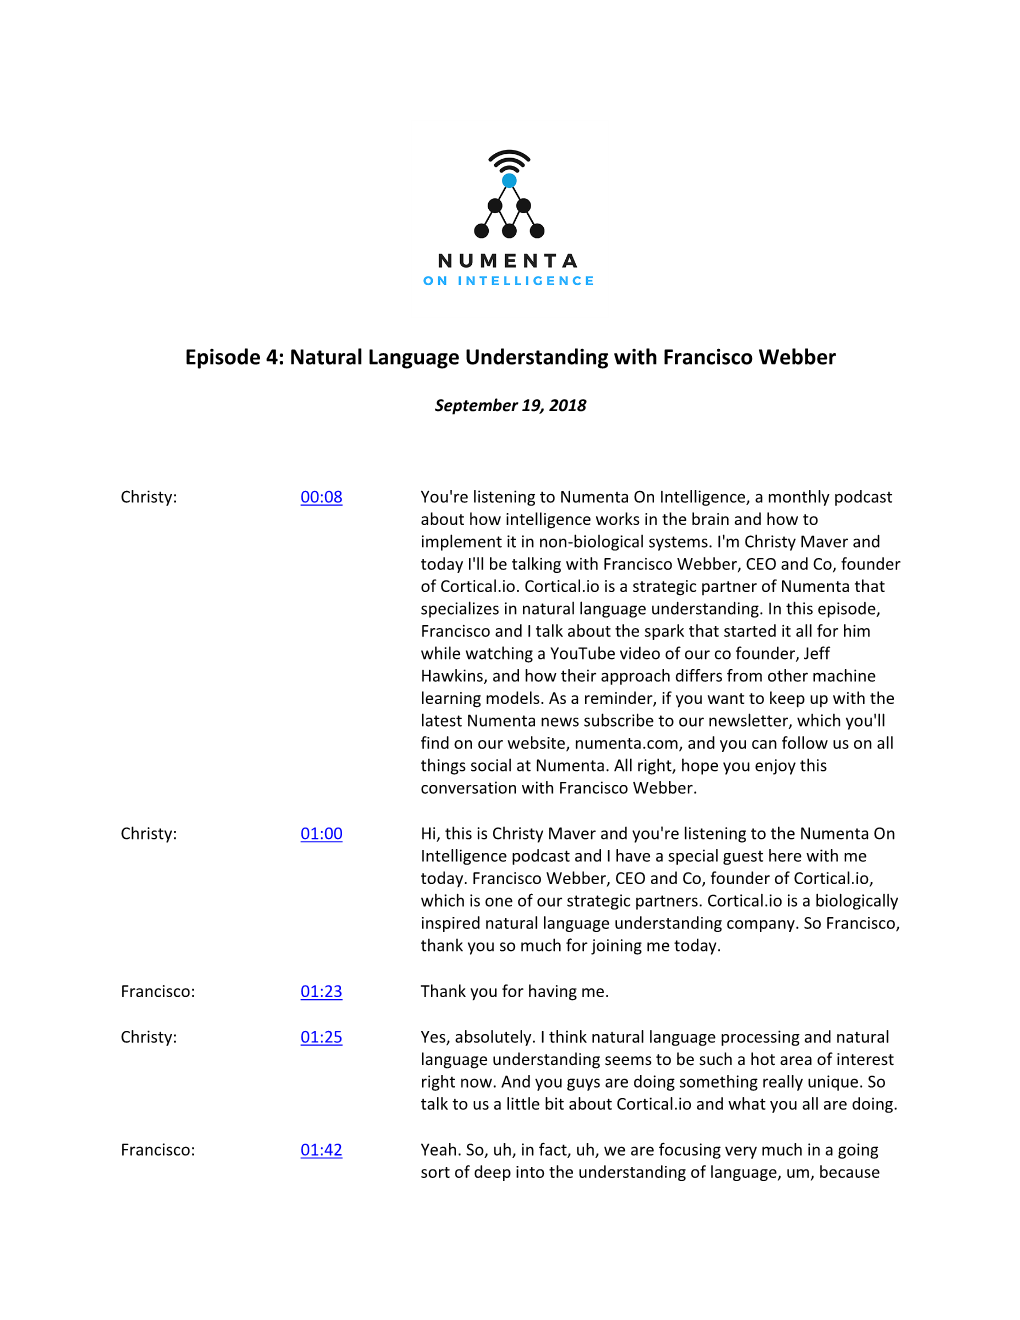 Natural Language Understanding with Francisco Webber